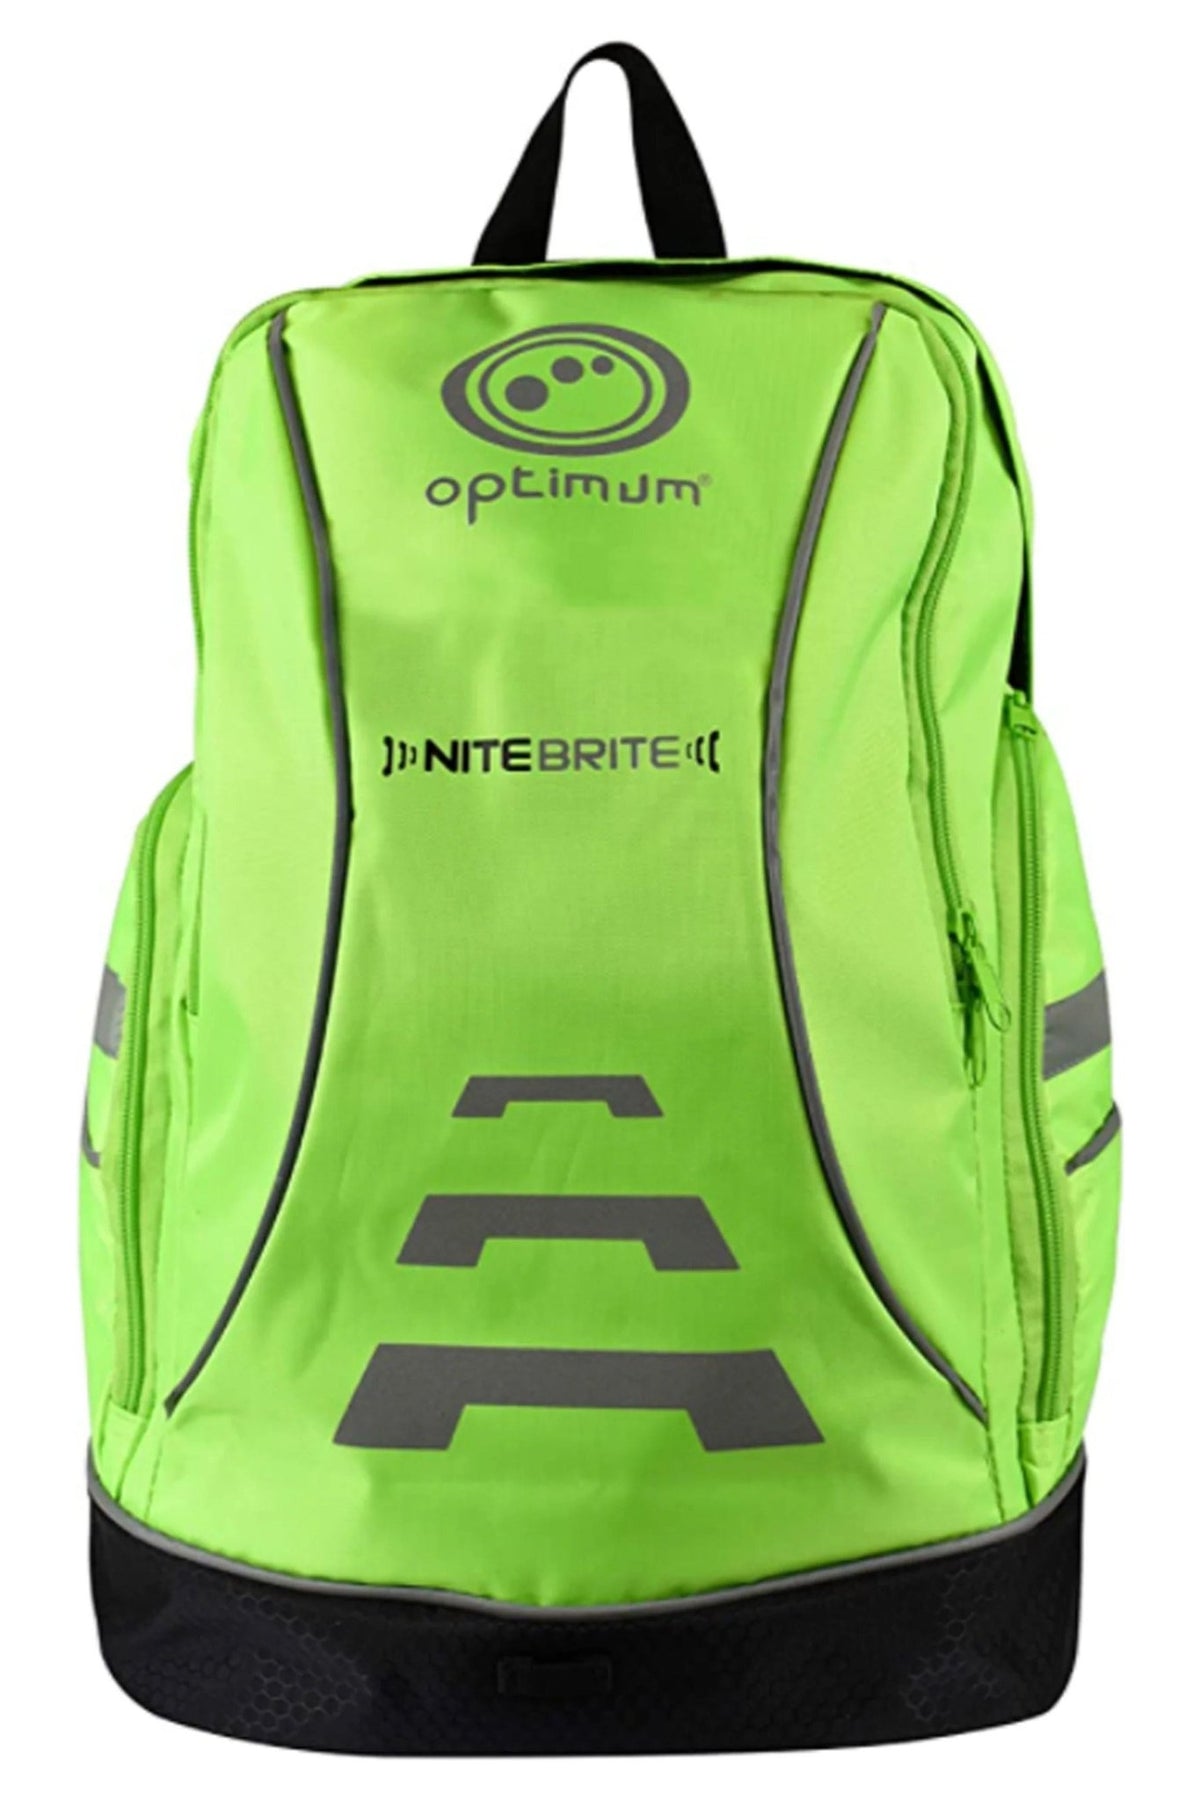 Nitebrite Backpack - Optimum